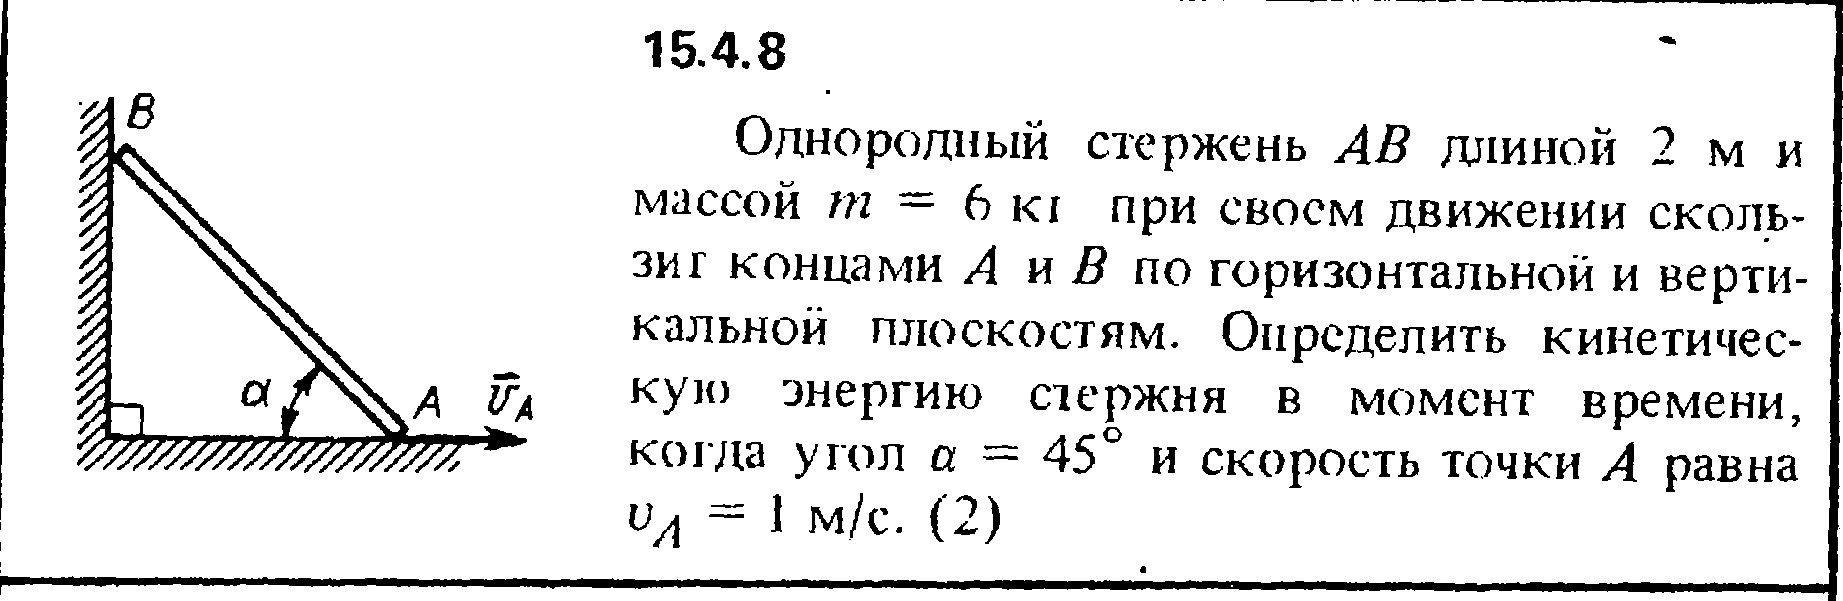 Решение задачи 15.4.8 из сборника Кепе О.Е. 1989 года